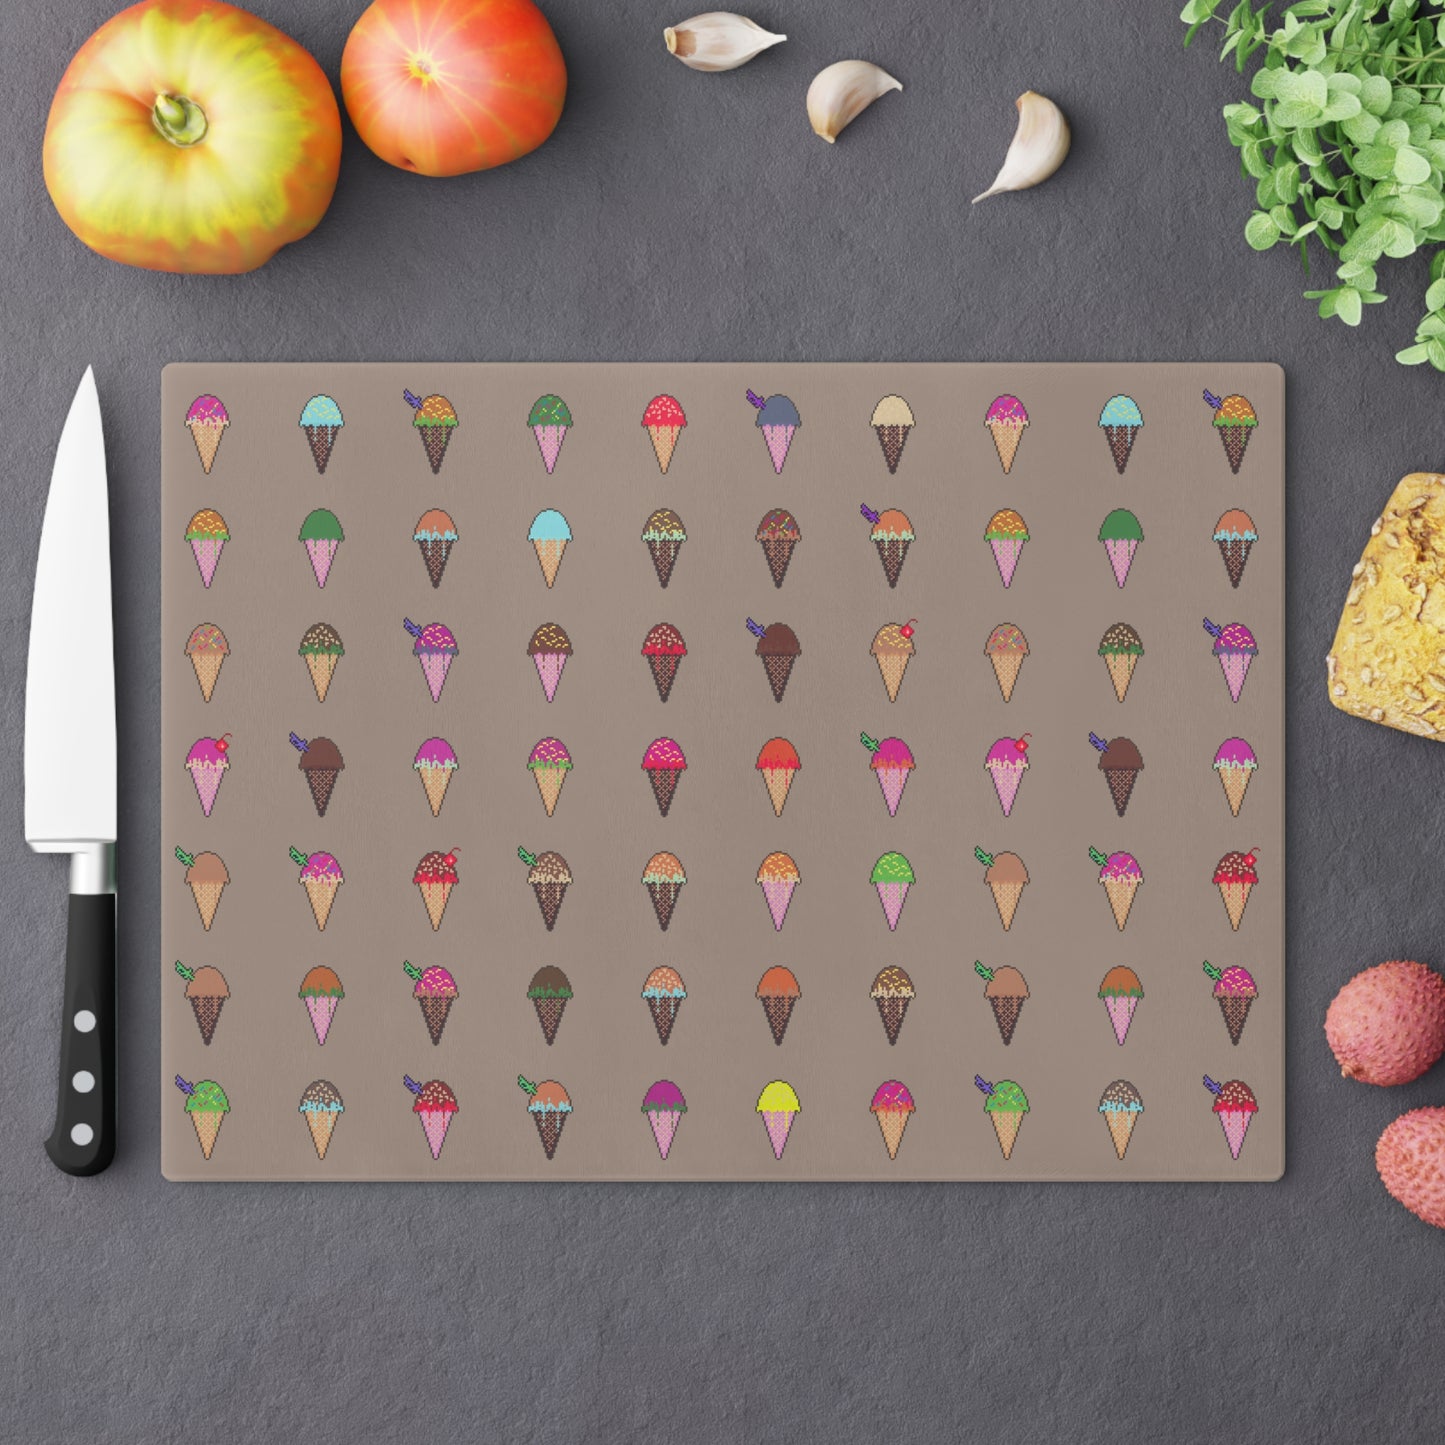 Non-Slip Glass Cutting Board Featuring Pixel Cones